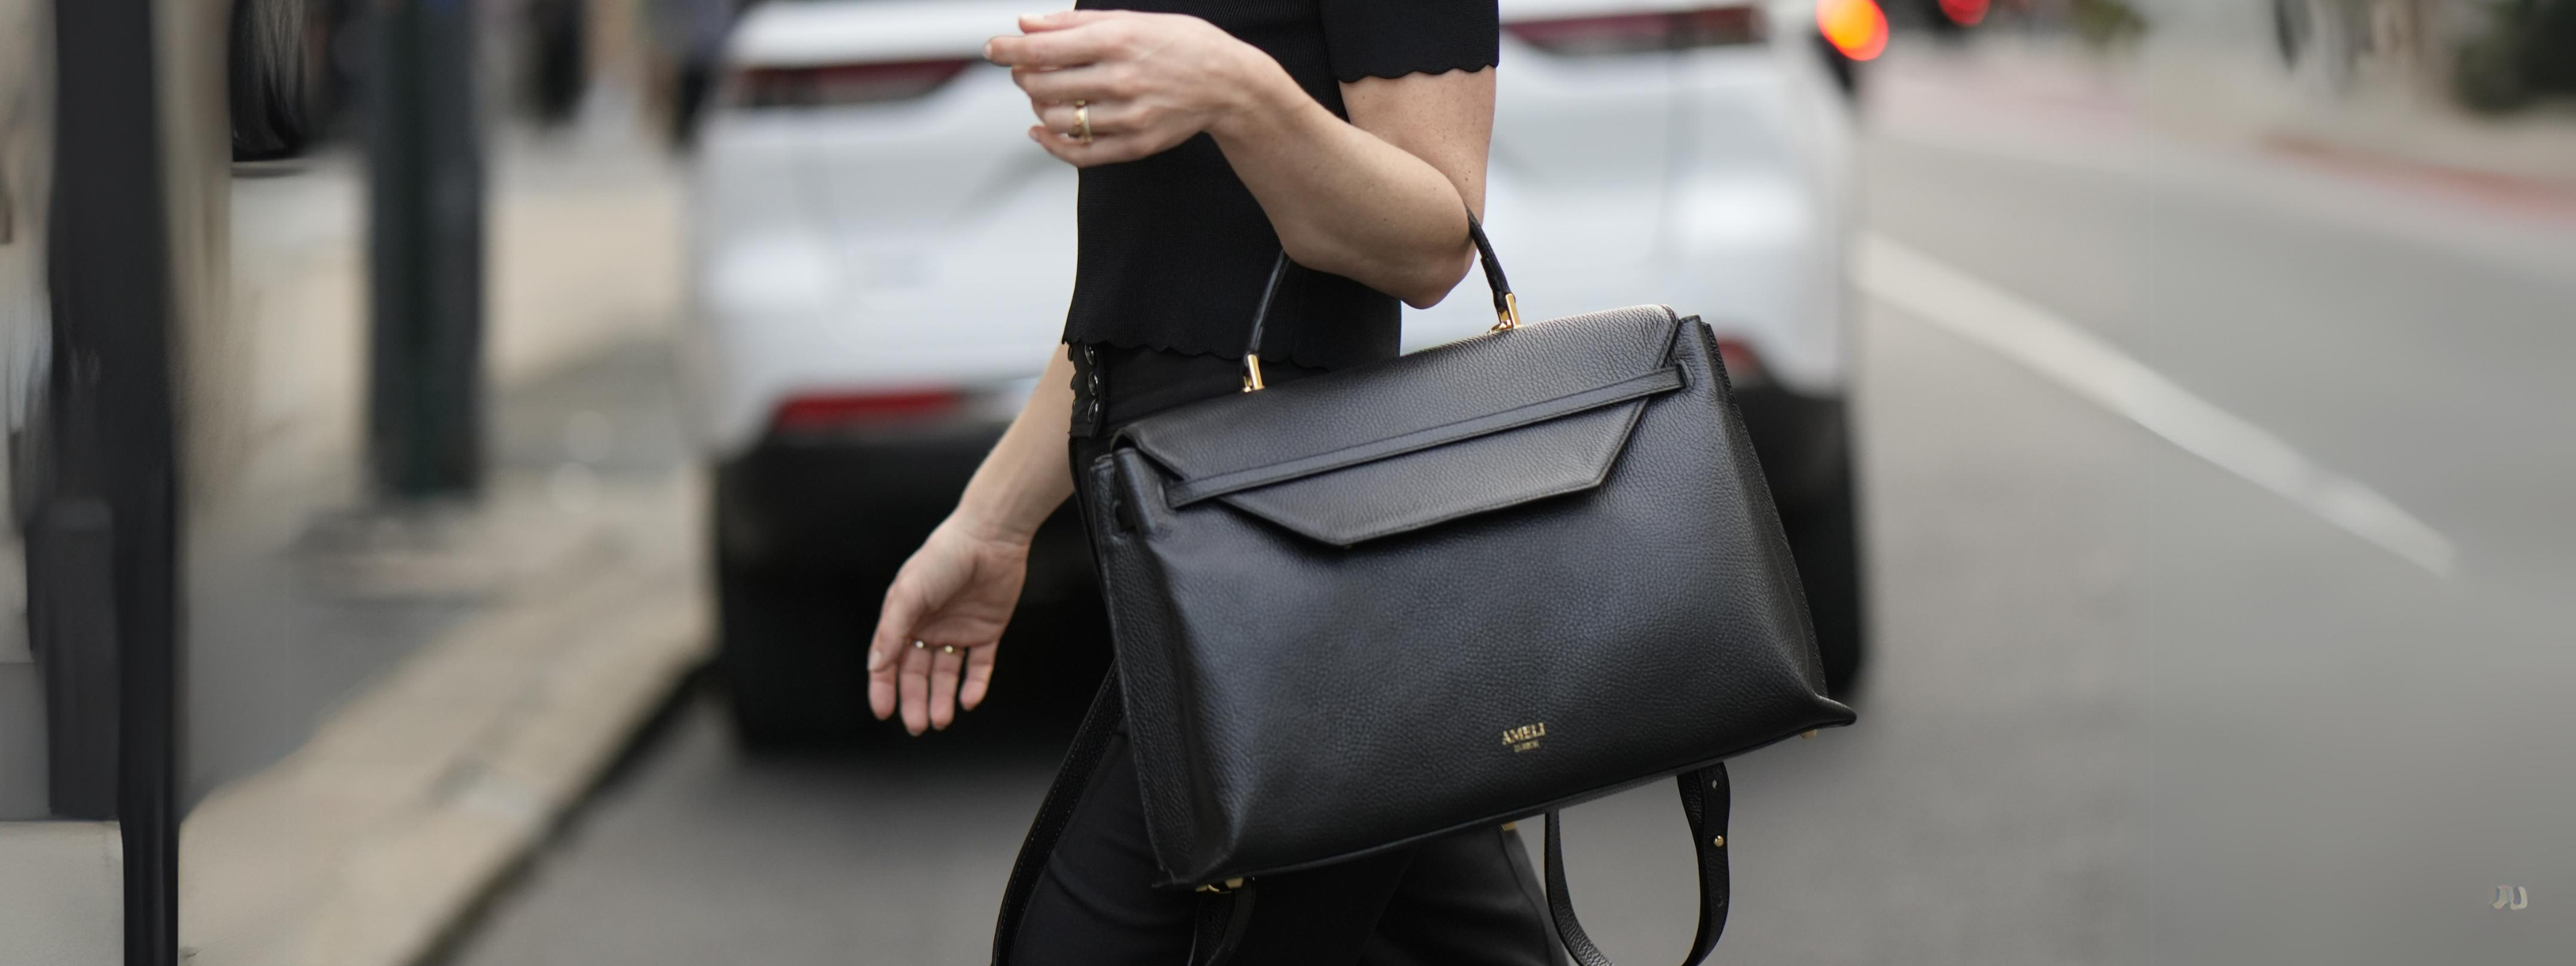 Handbags for Women | Saint Laurent Canada | YSL.com